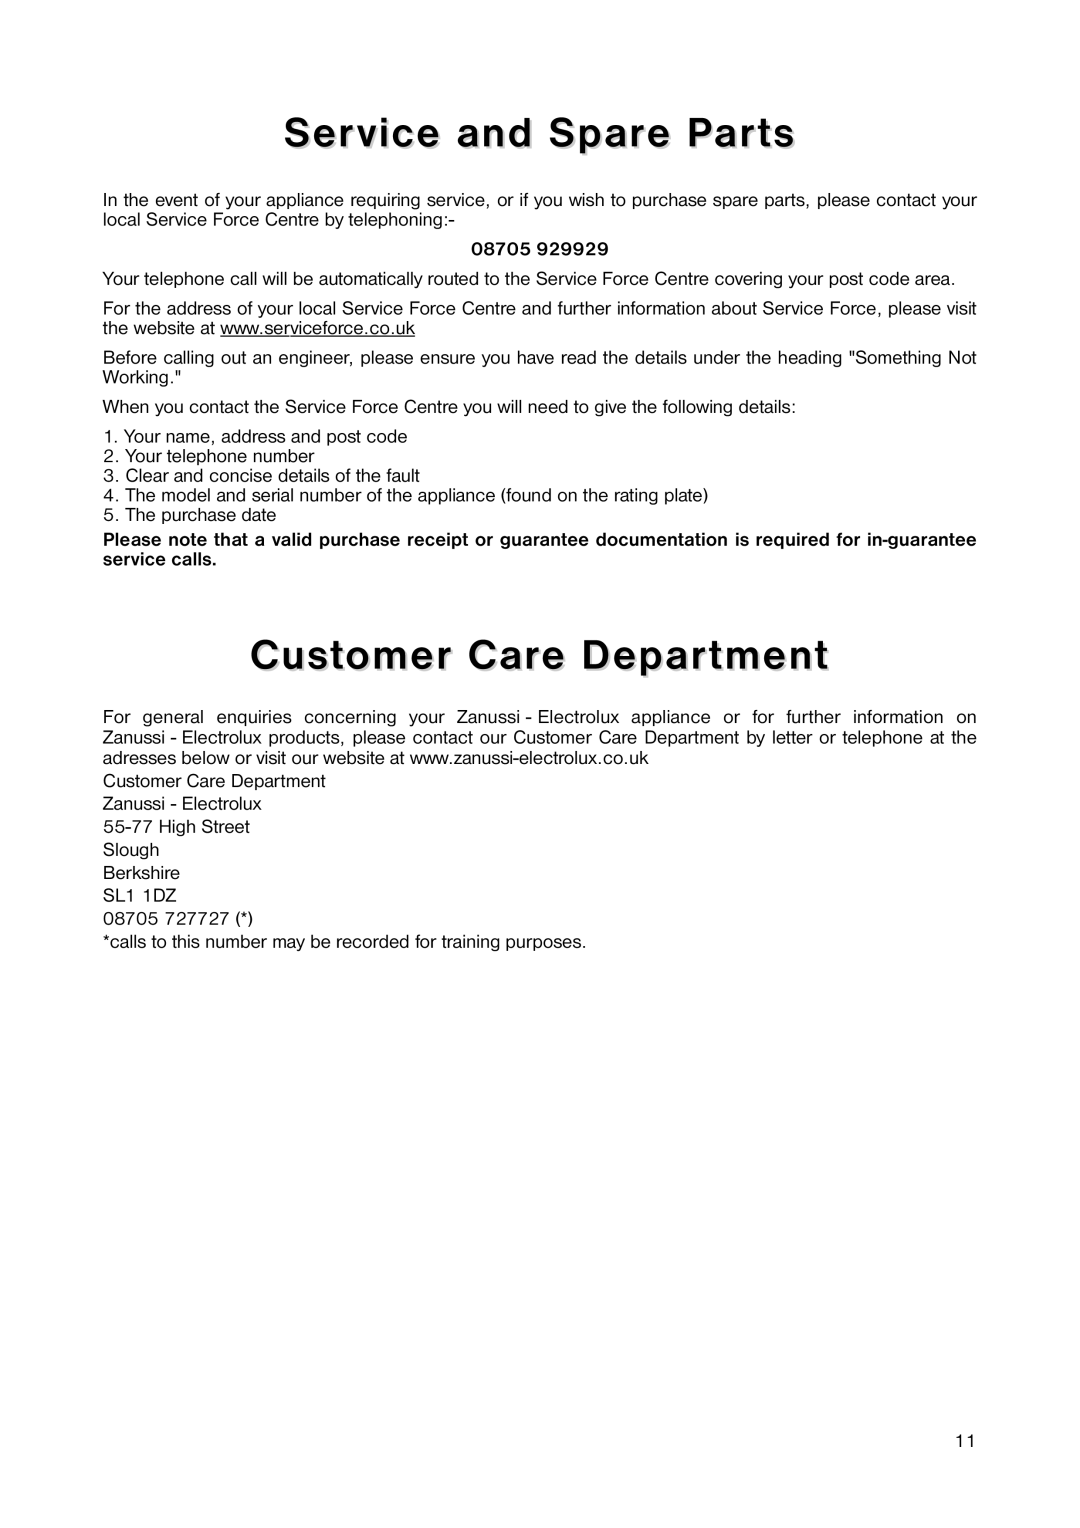 Zanussi ZERC 0750 manual Service and Spare Parts, Customer Care Department, 08705 